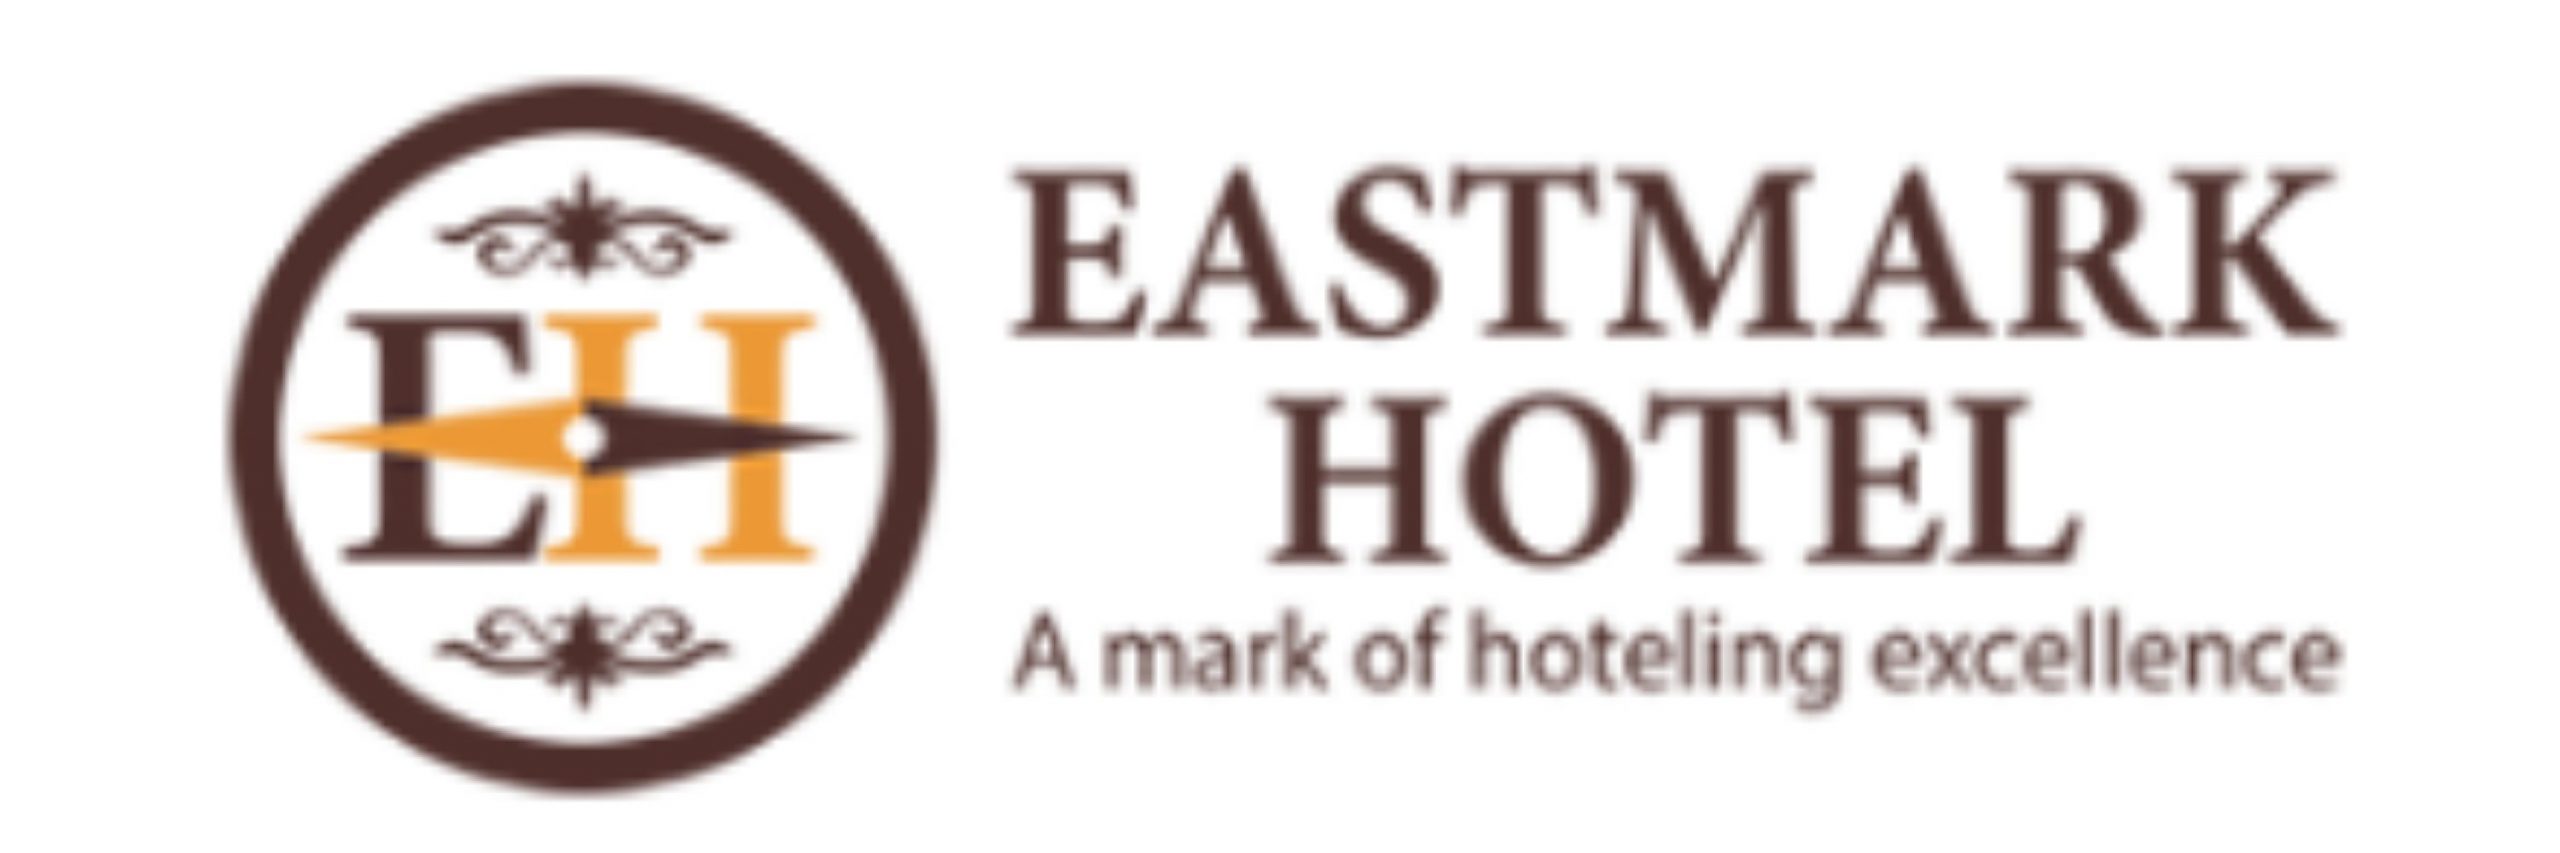 Eastmark Hotel |   Breakfast